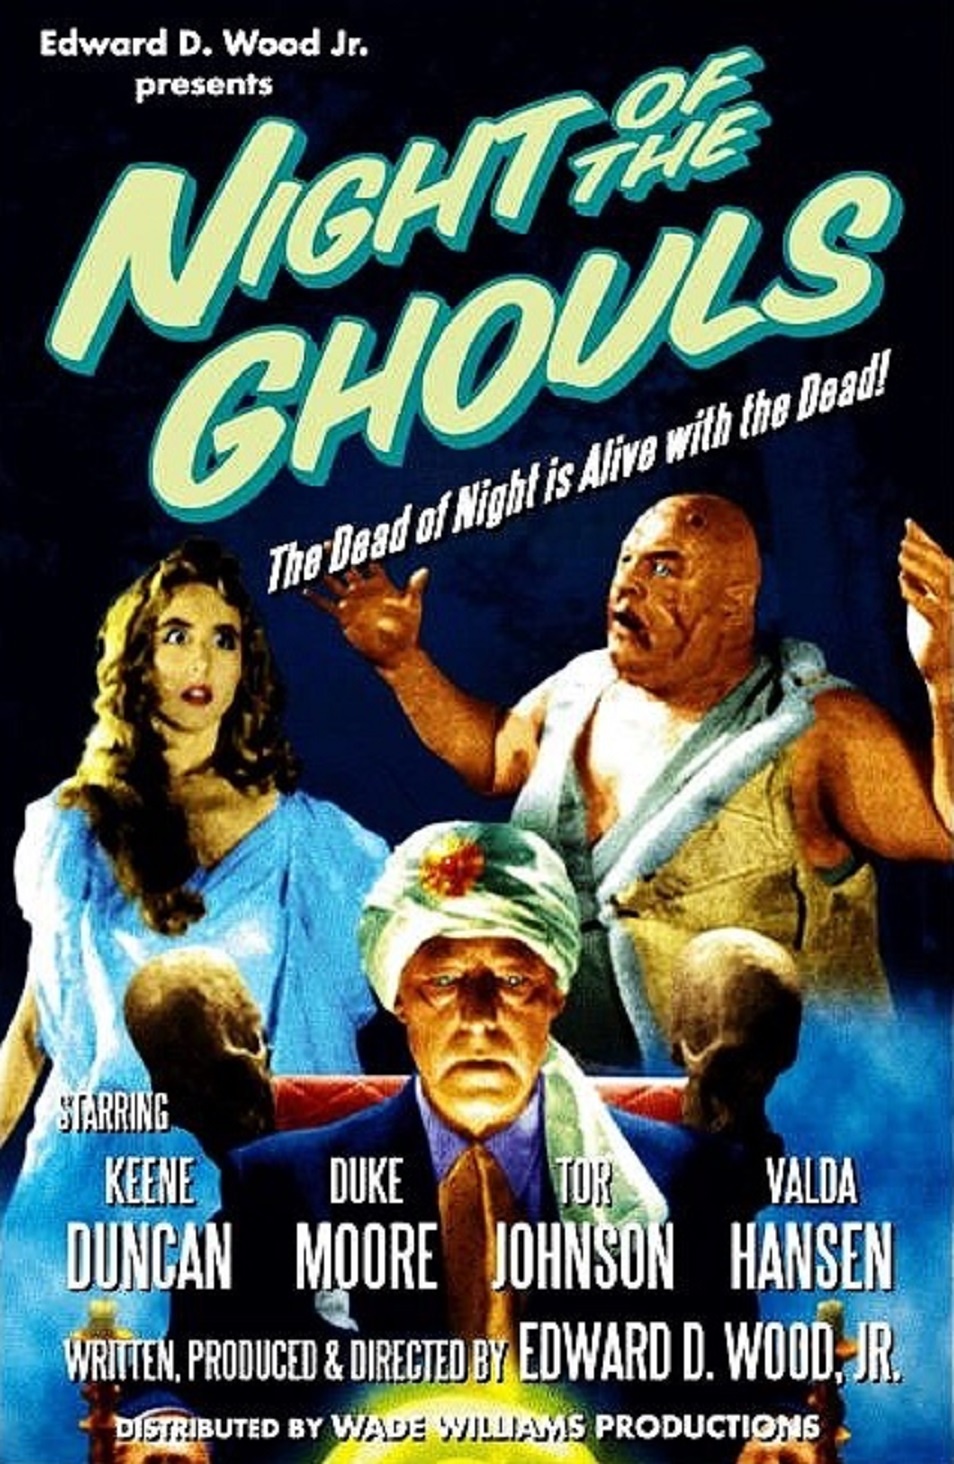 moght of the ghouls poster.jpg